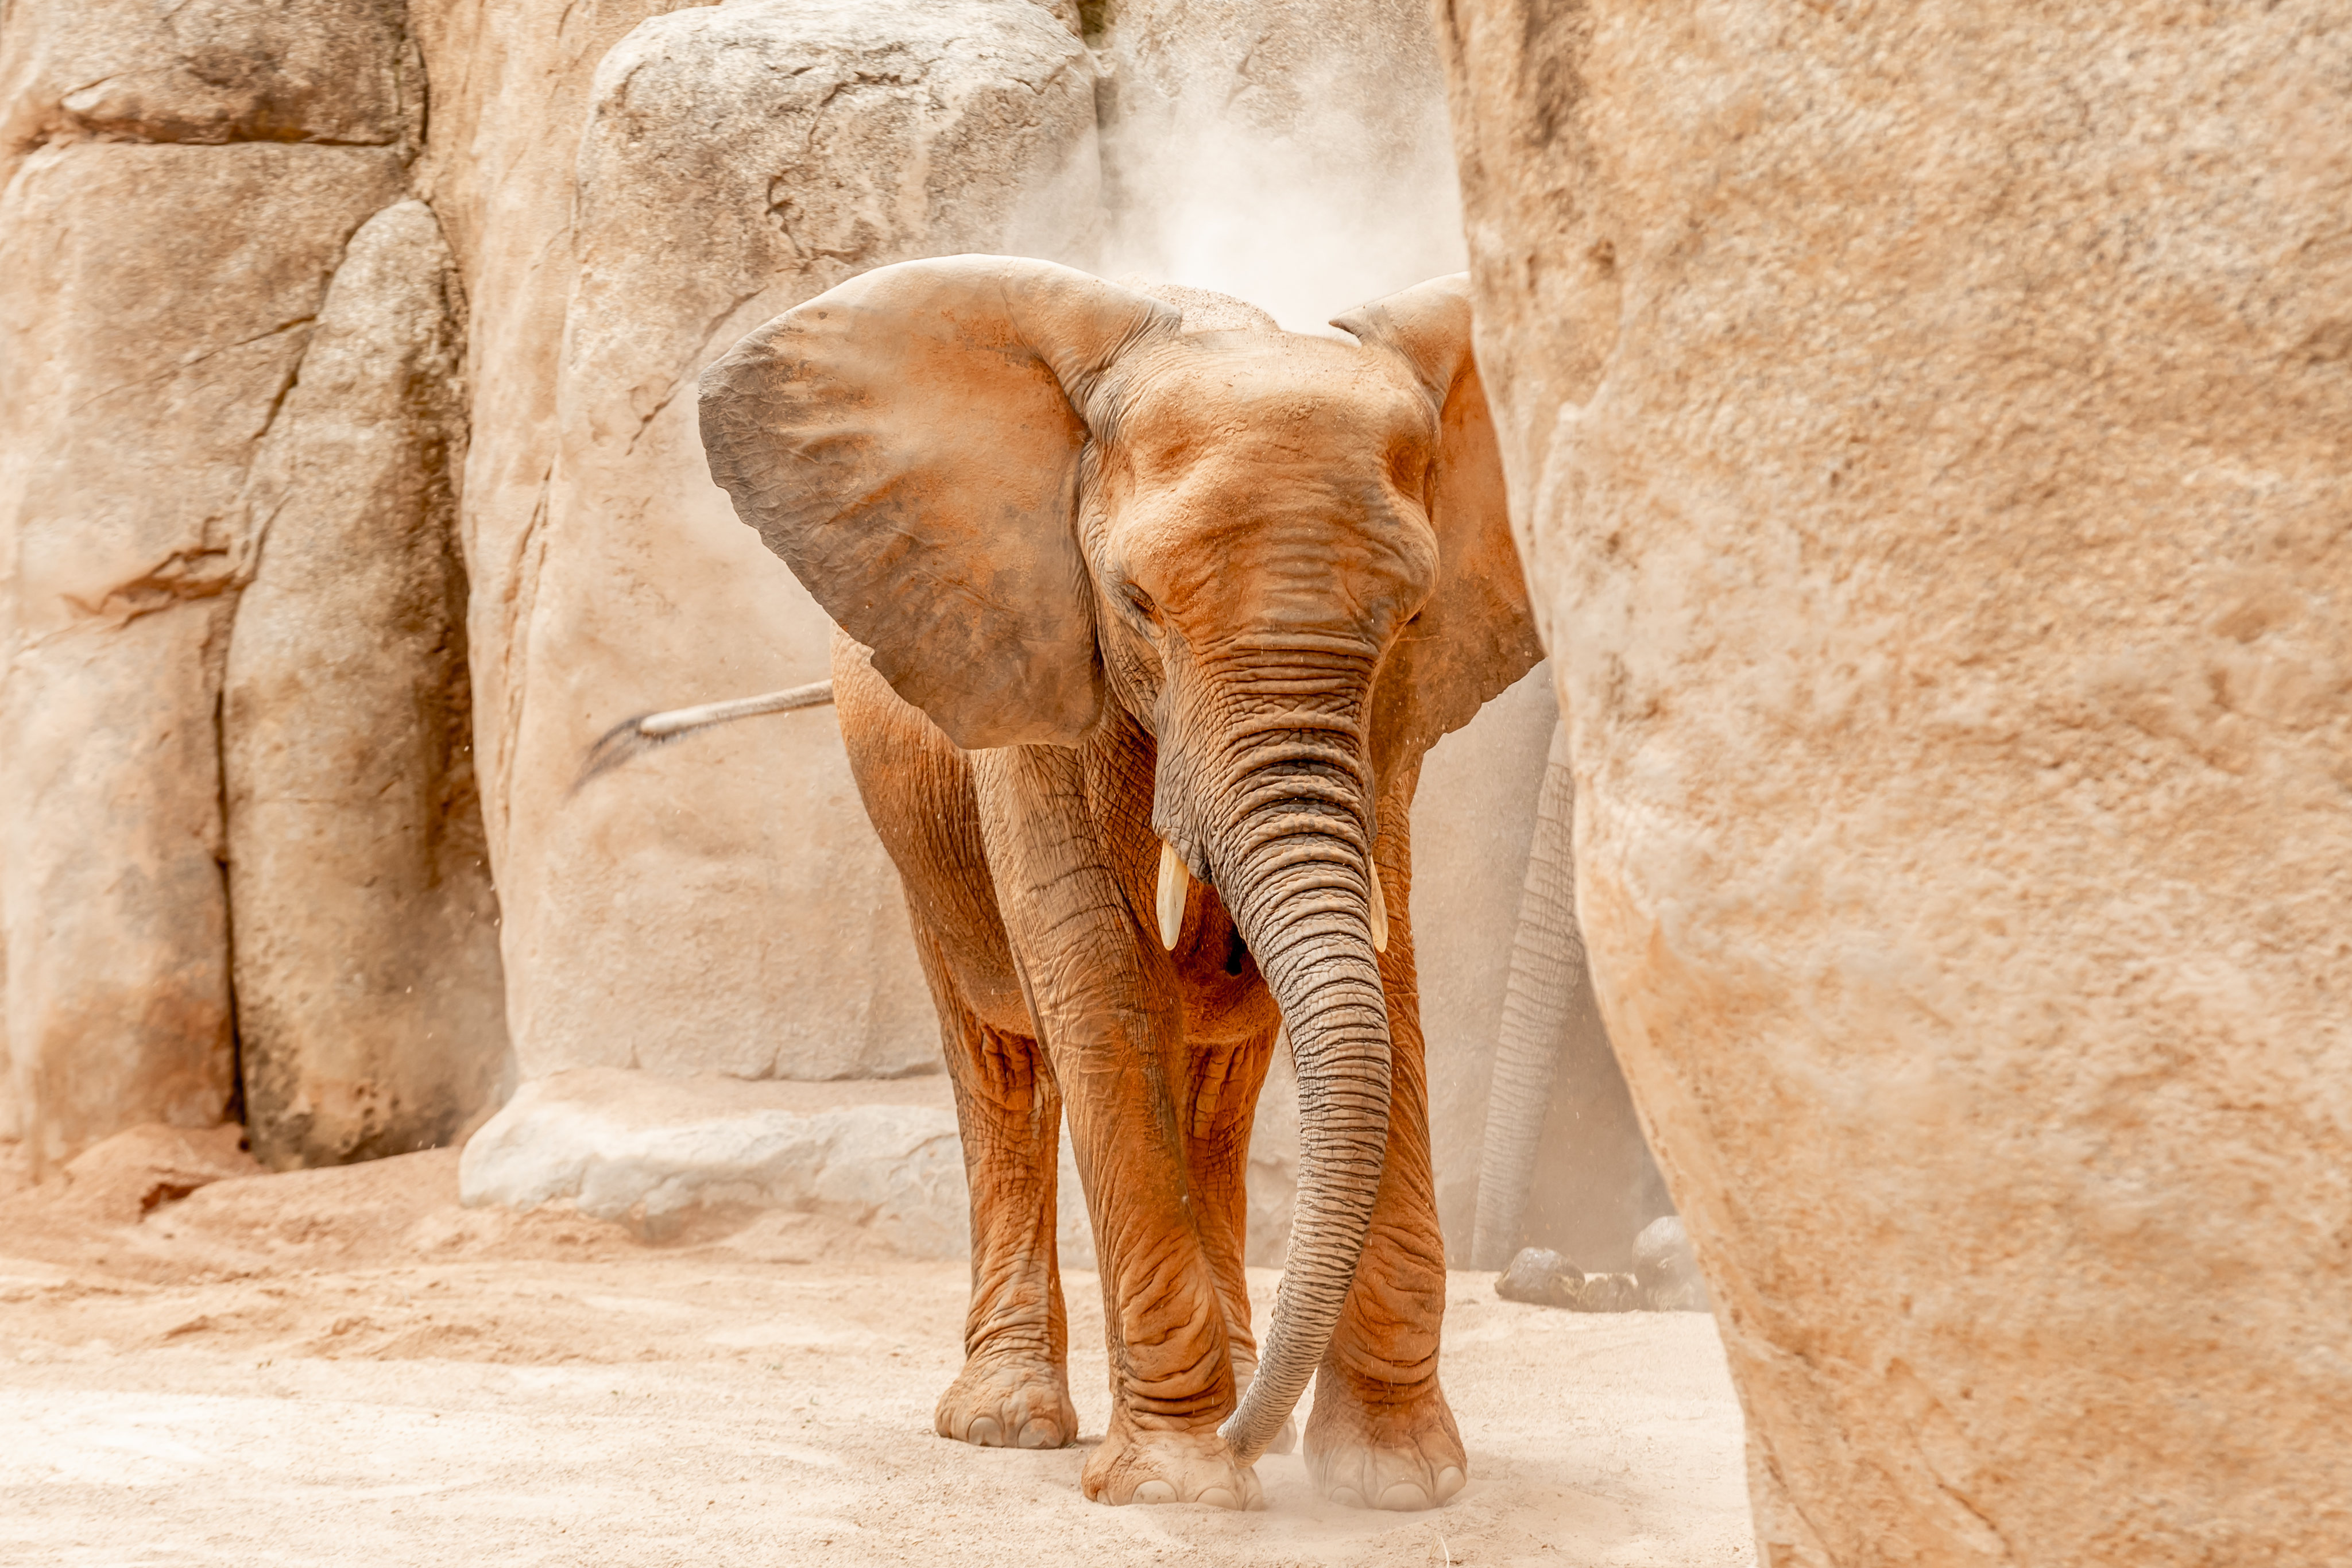 Elephant Dust Zoo Photography 4096x2731